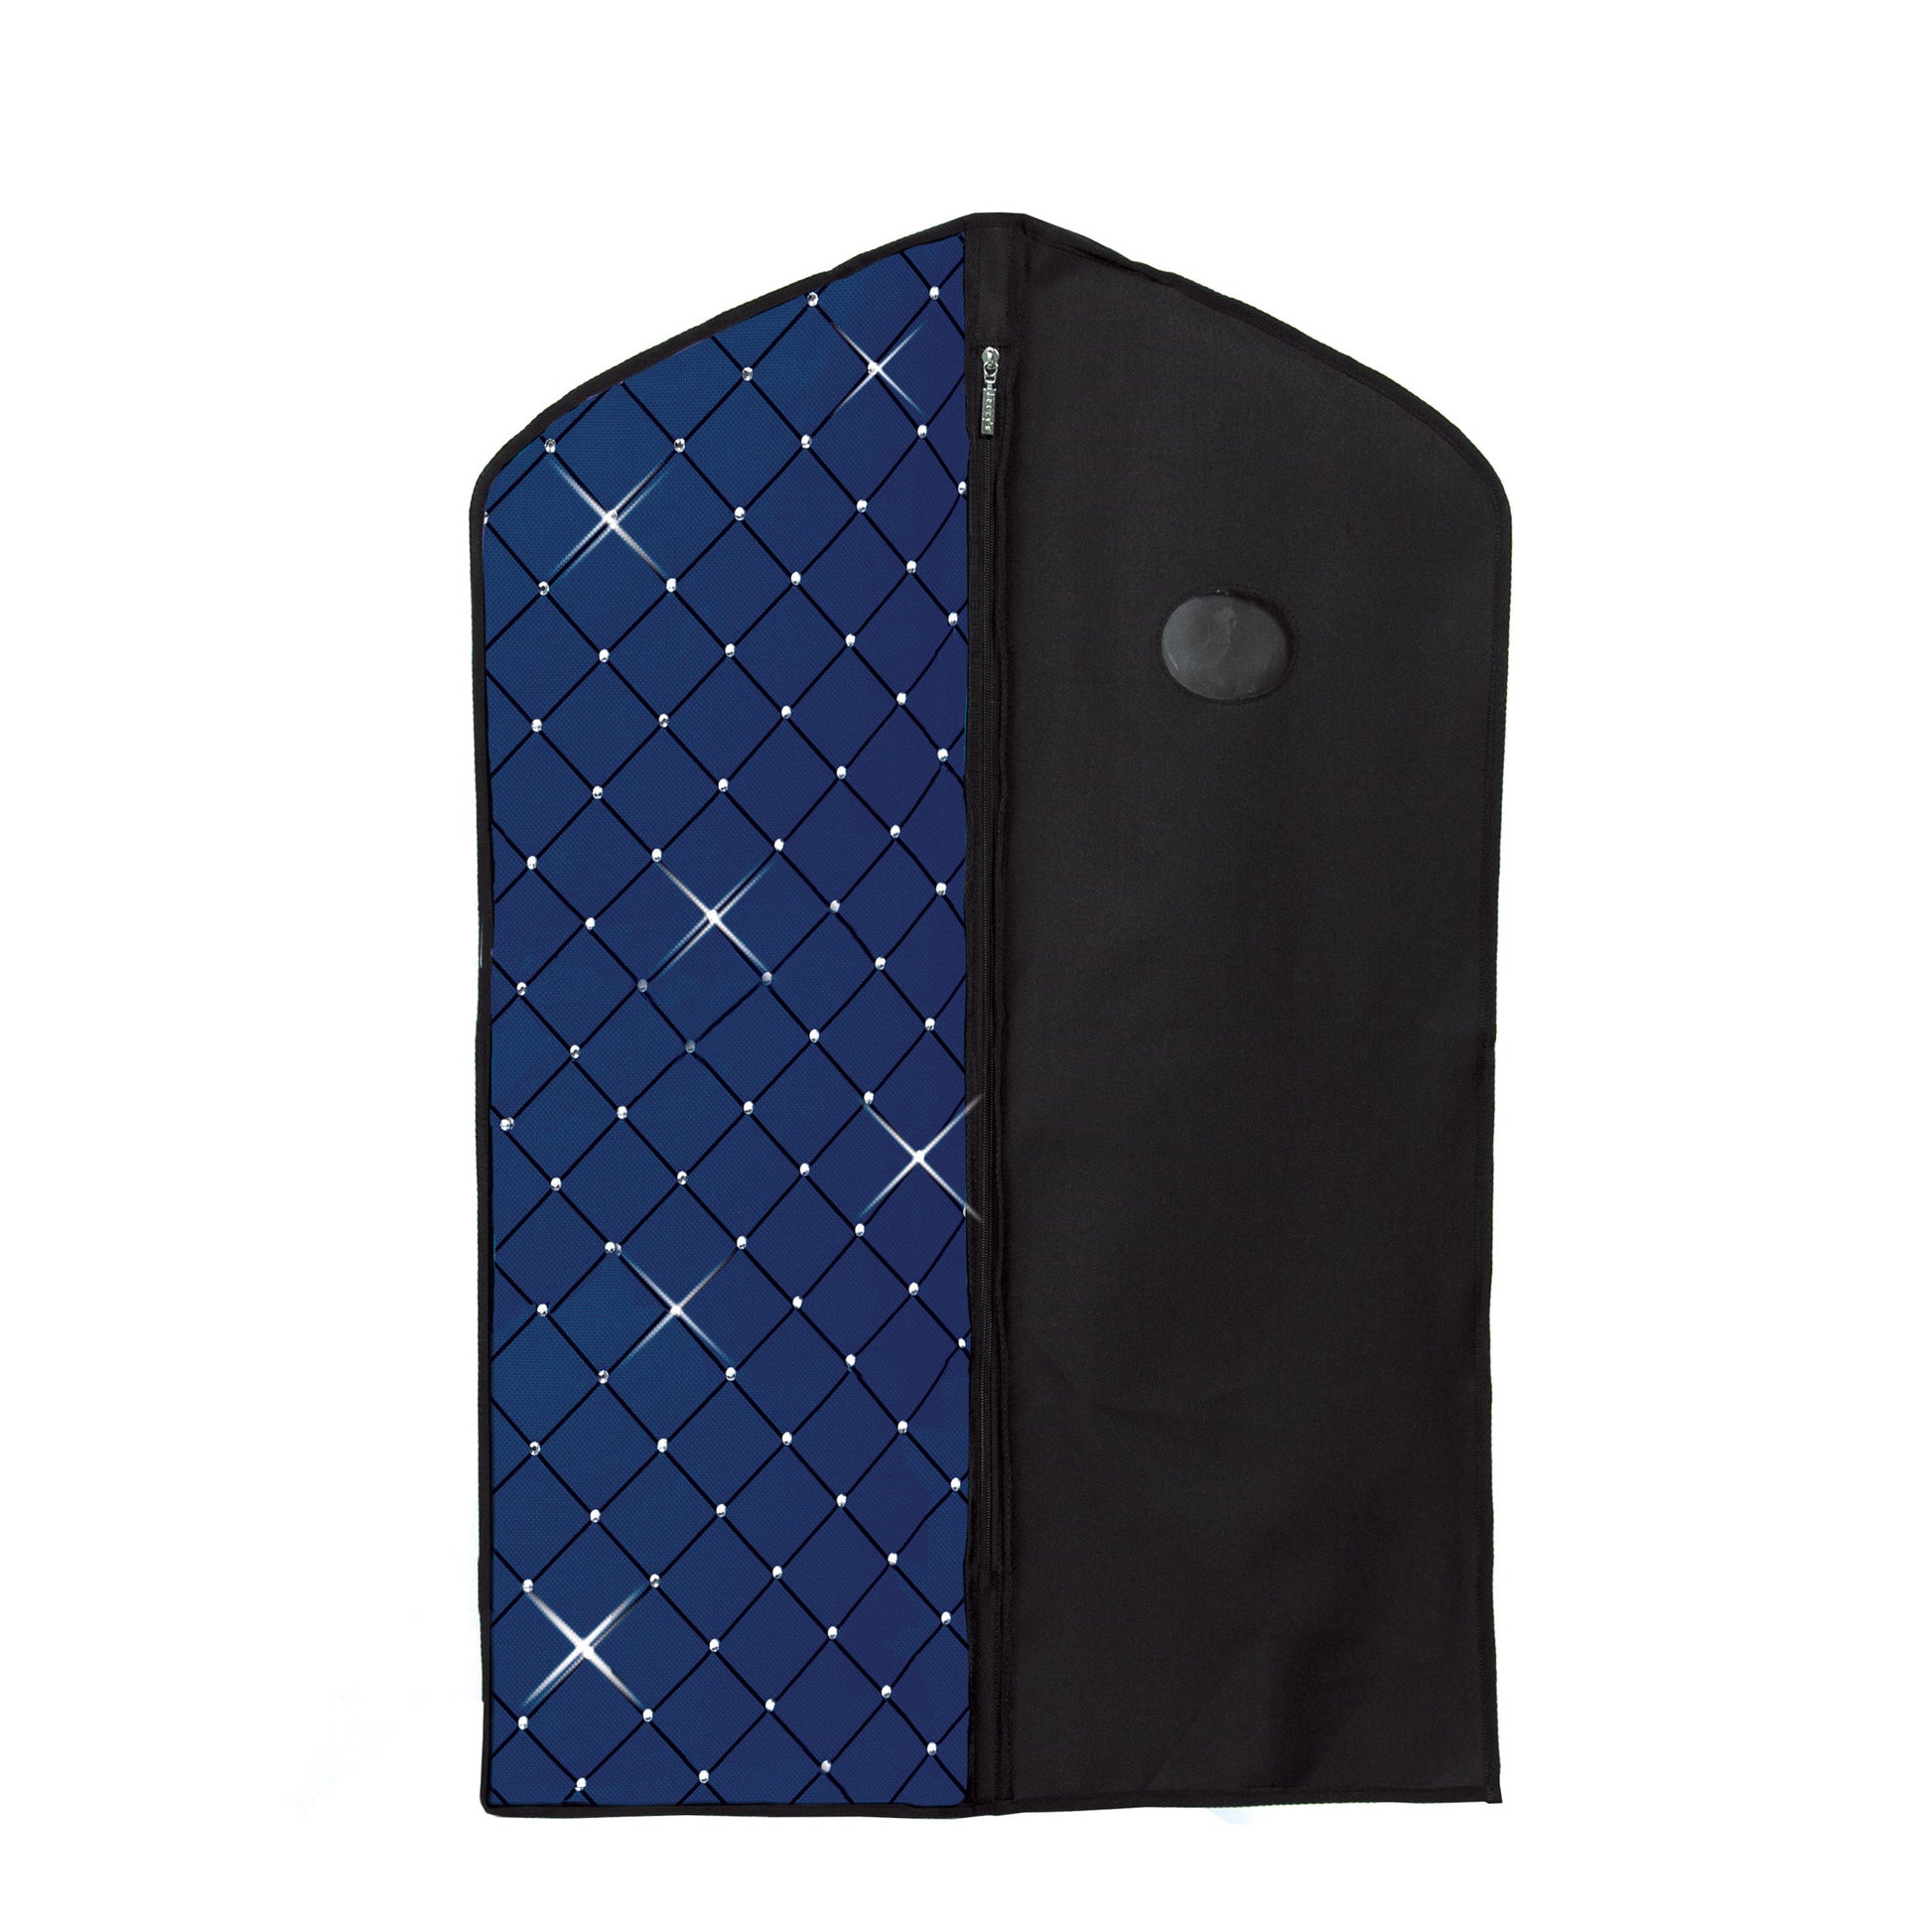 a black suit case with a blue tie on it 